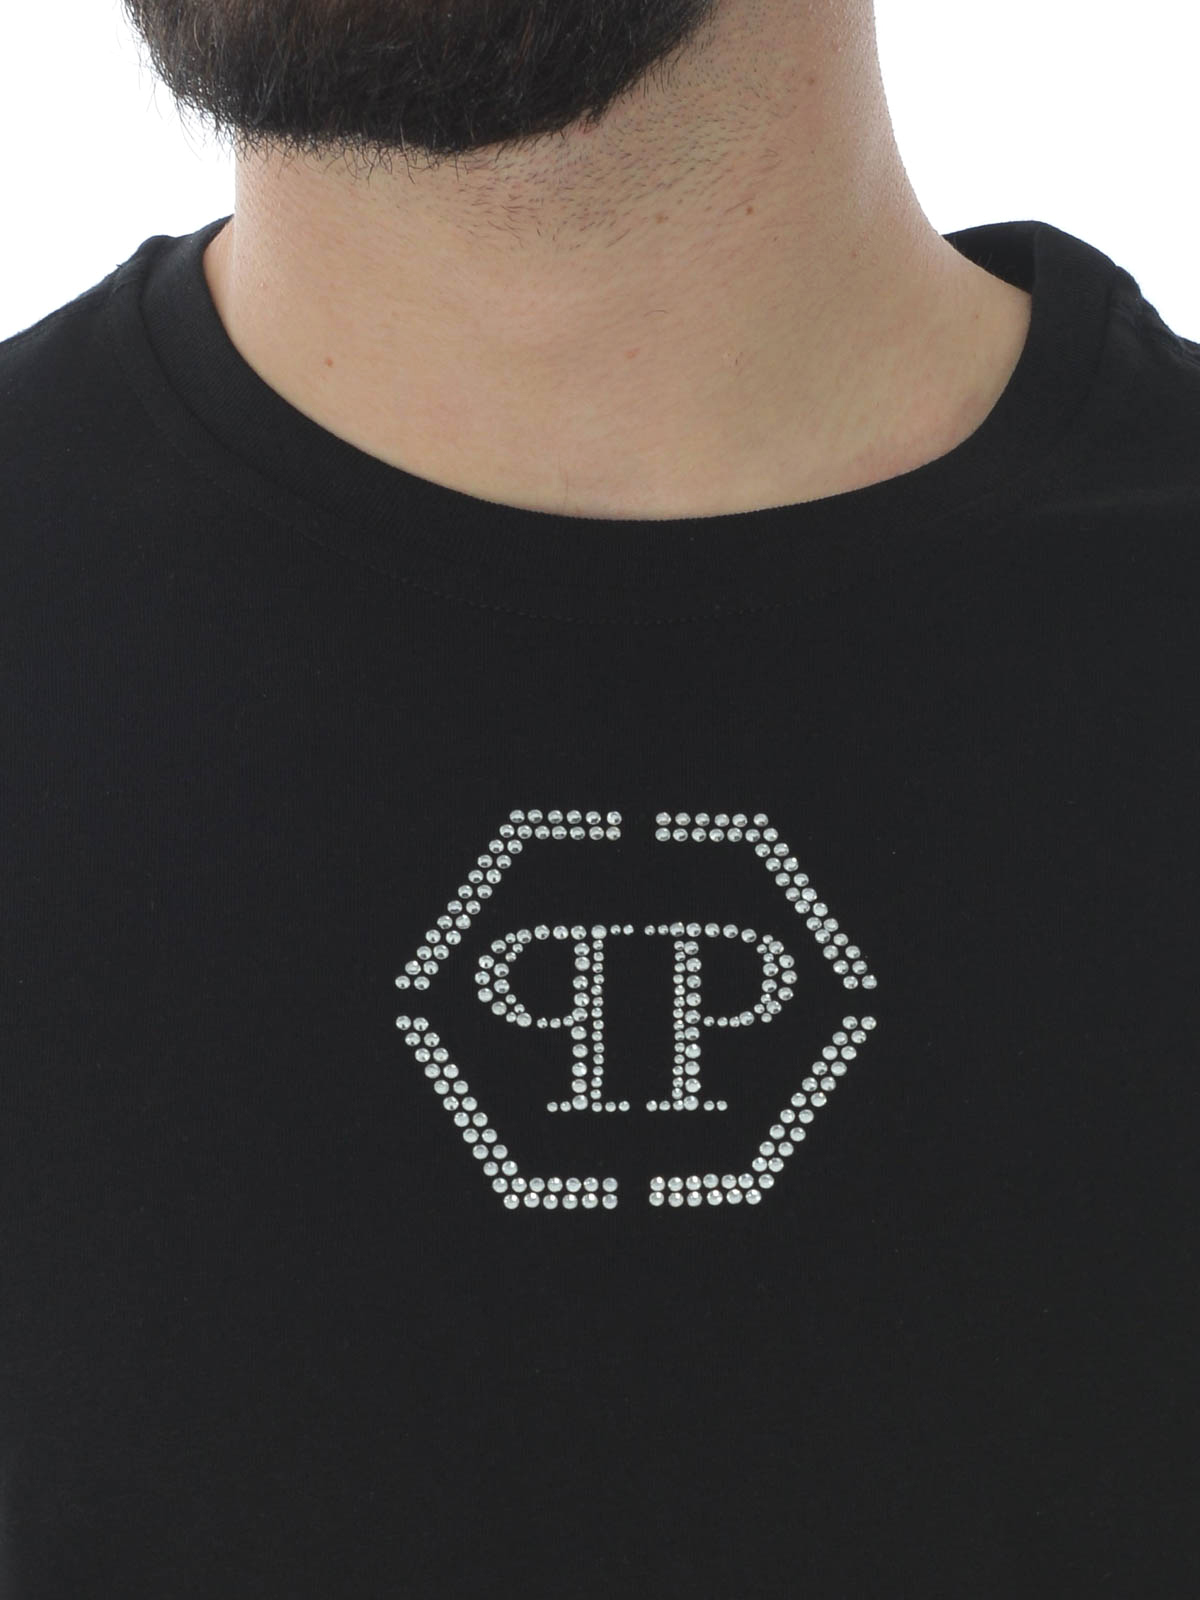 philipp plein crystal t shirt